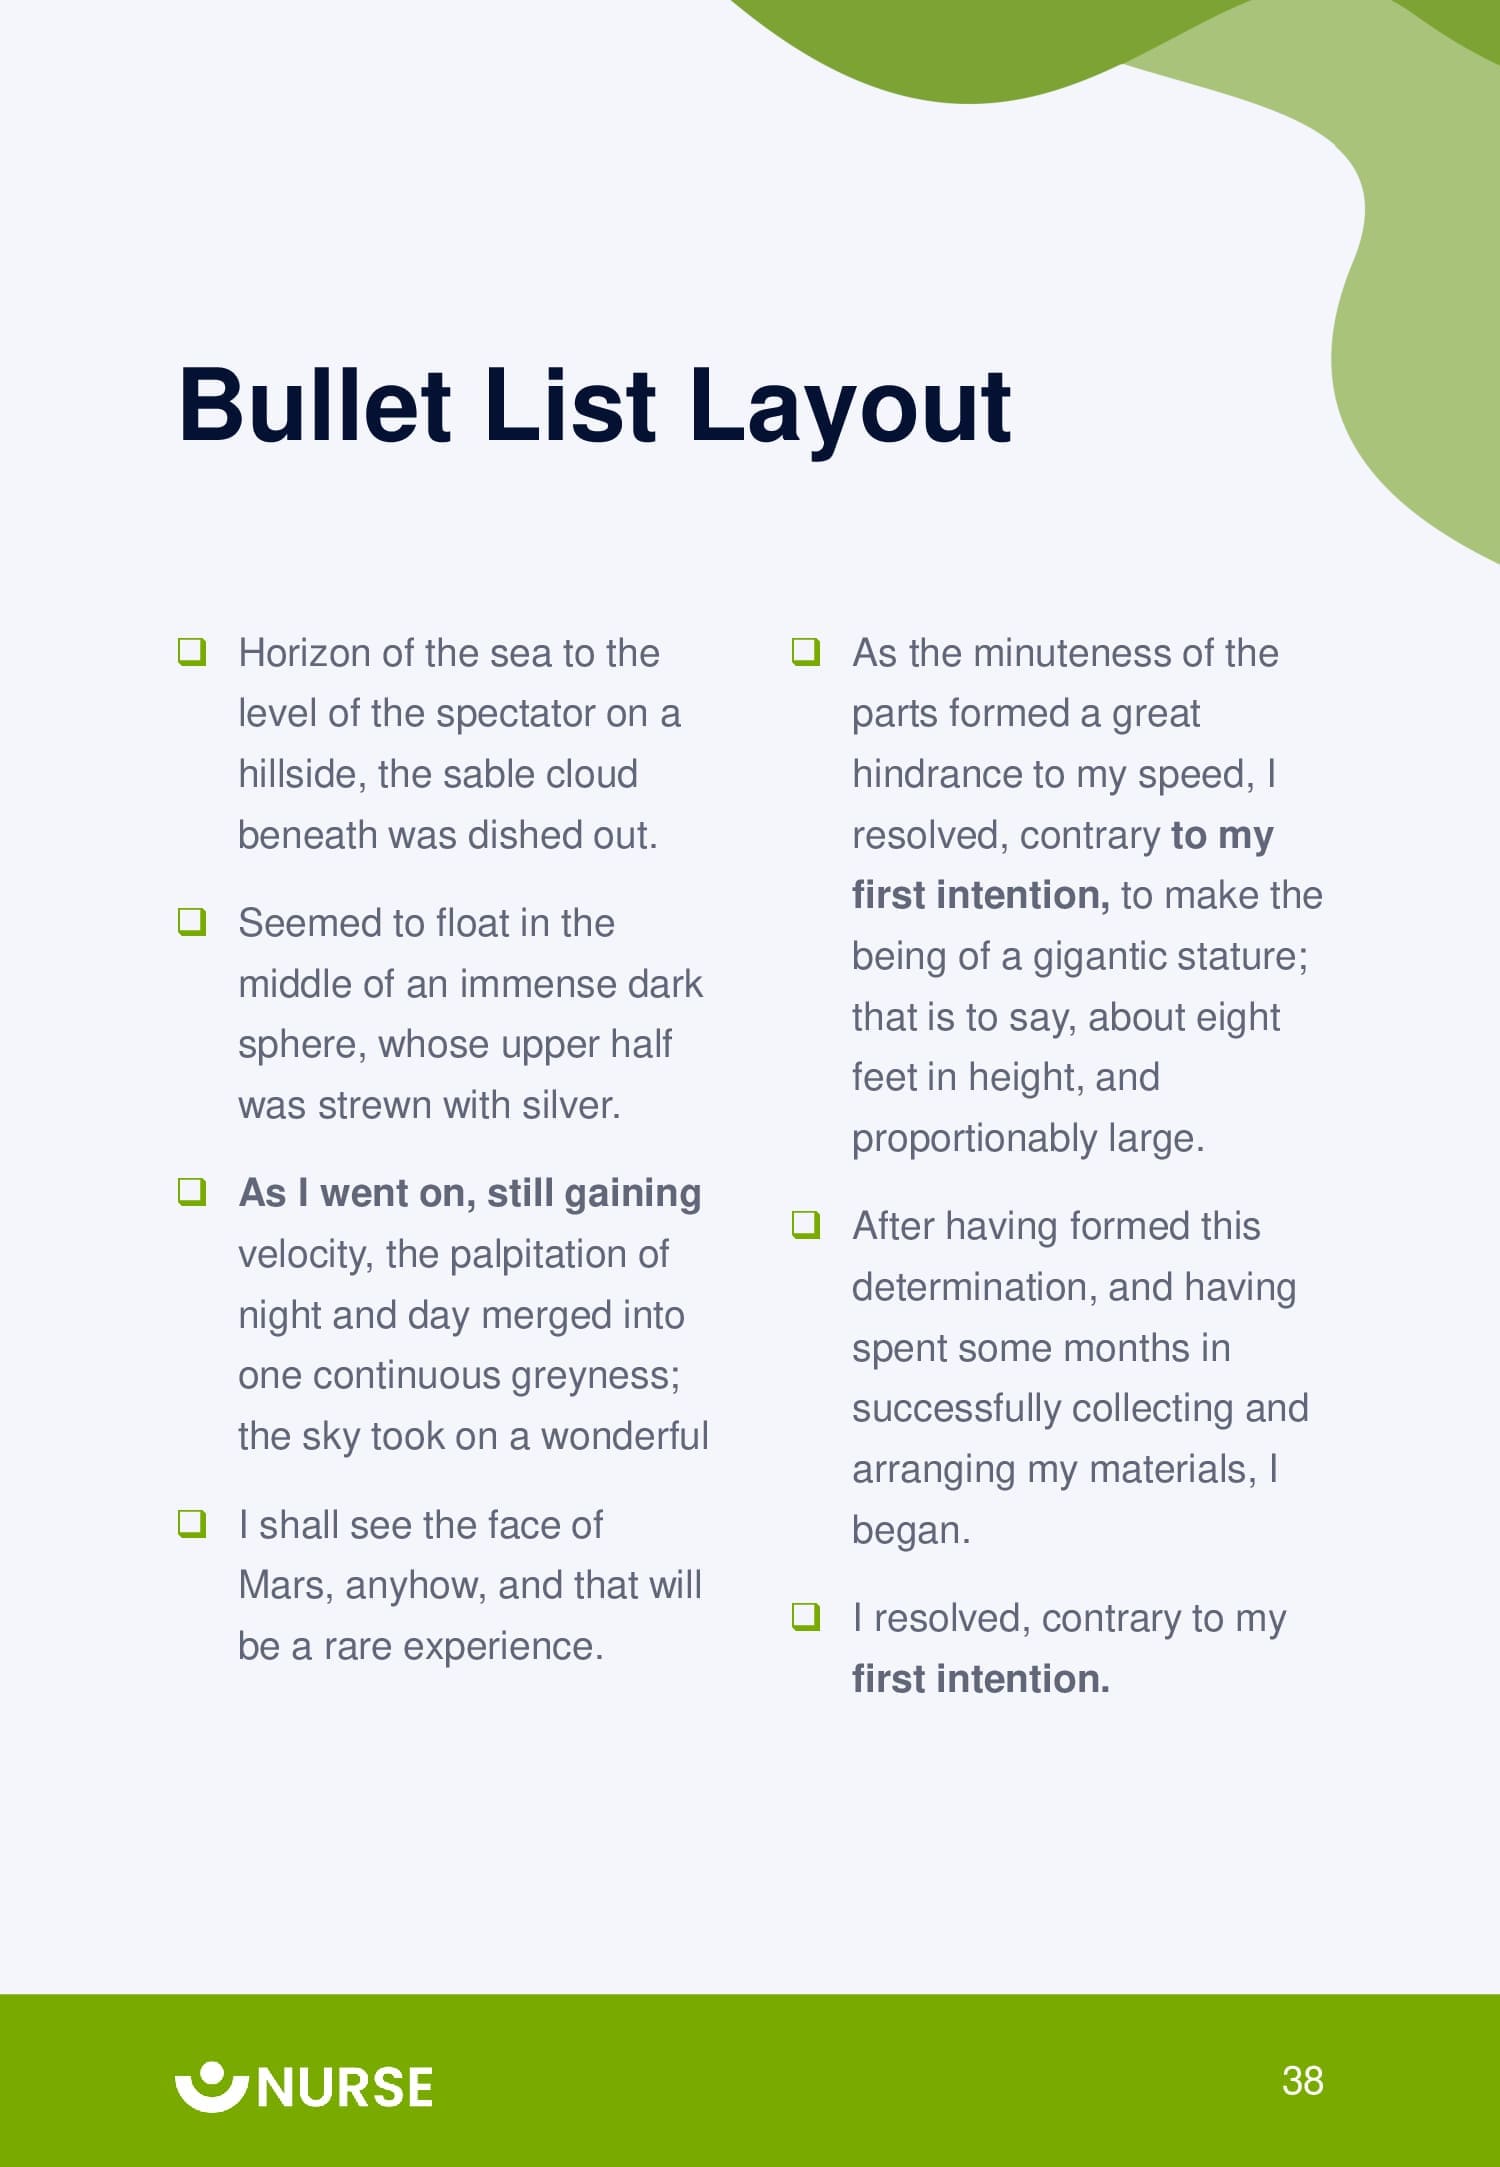 Bullet list layout.